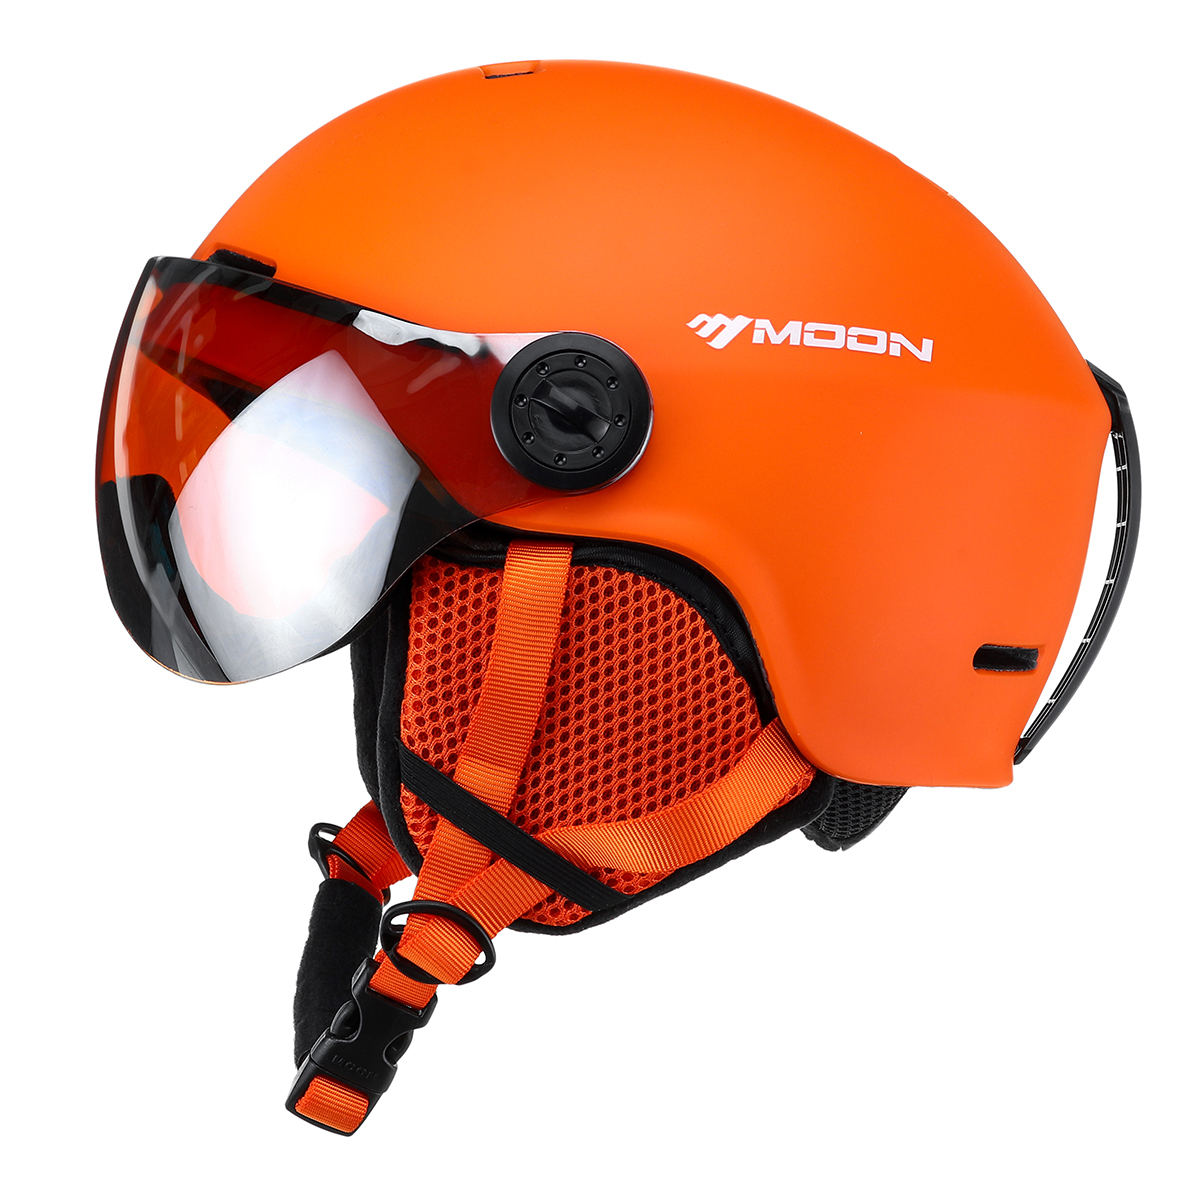 

Moon Winter Ski Snowboard Helmet With Visor Goggles Sport Mask Safety Windproof